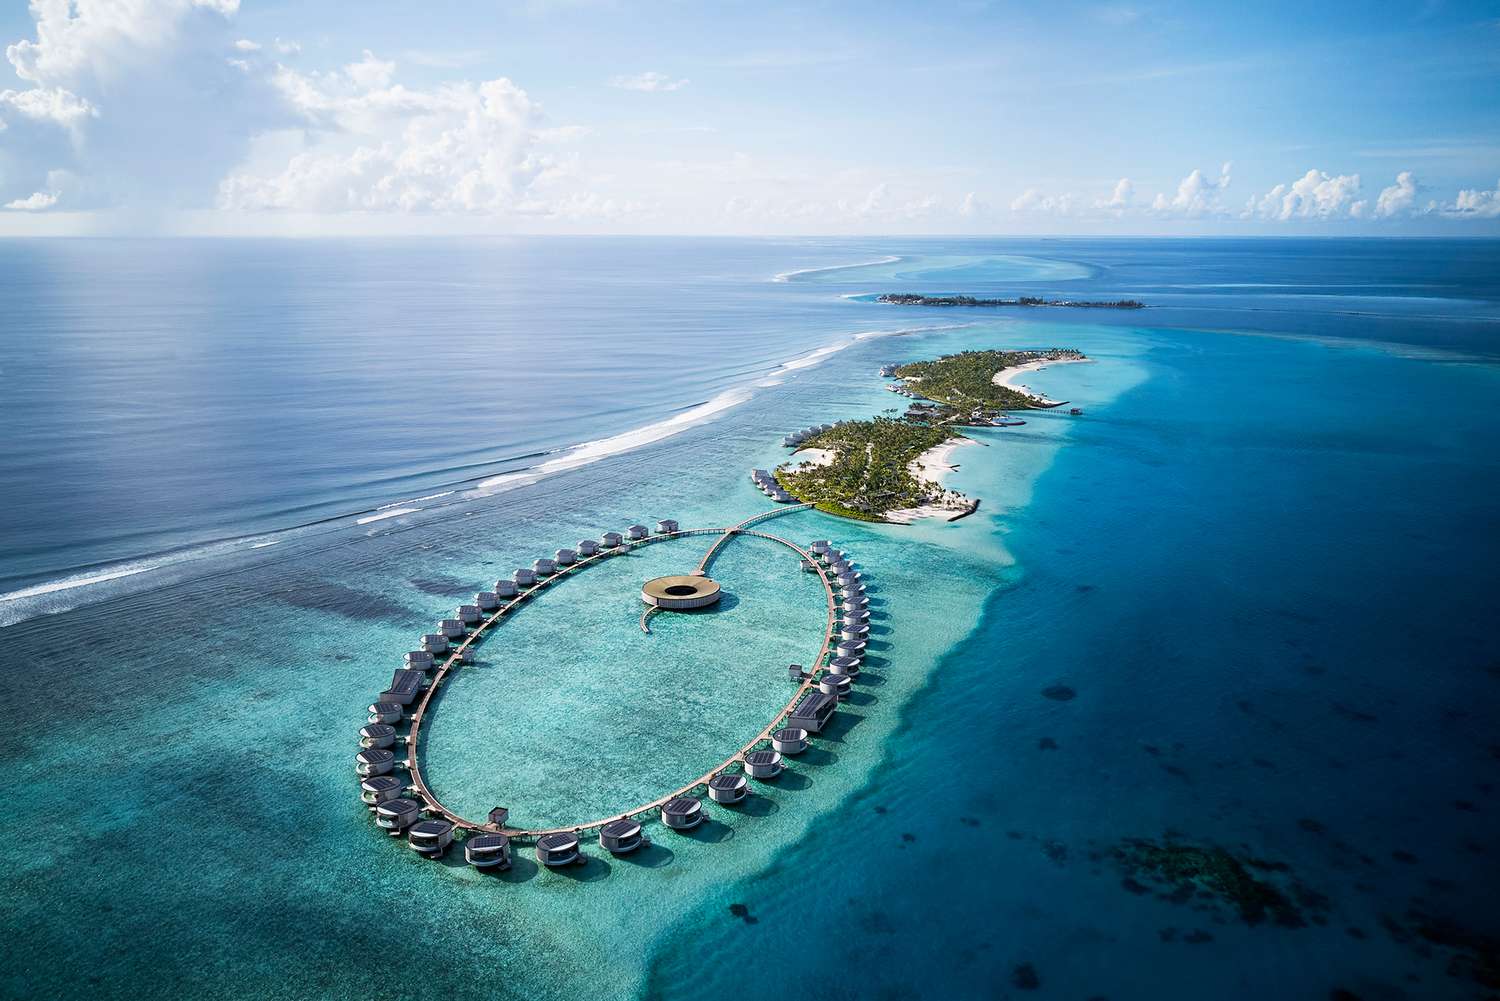 Aerial view of The Ritz-Carlton Maldives, Fari Islands